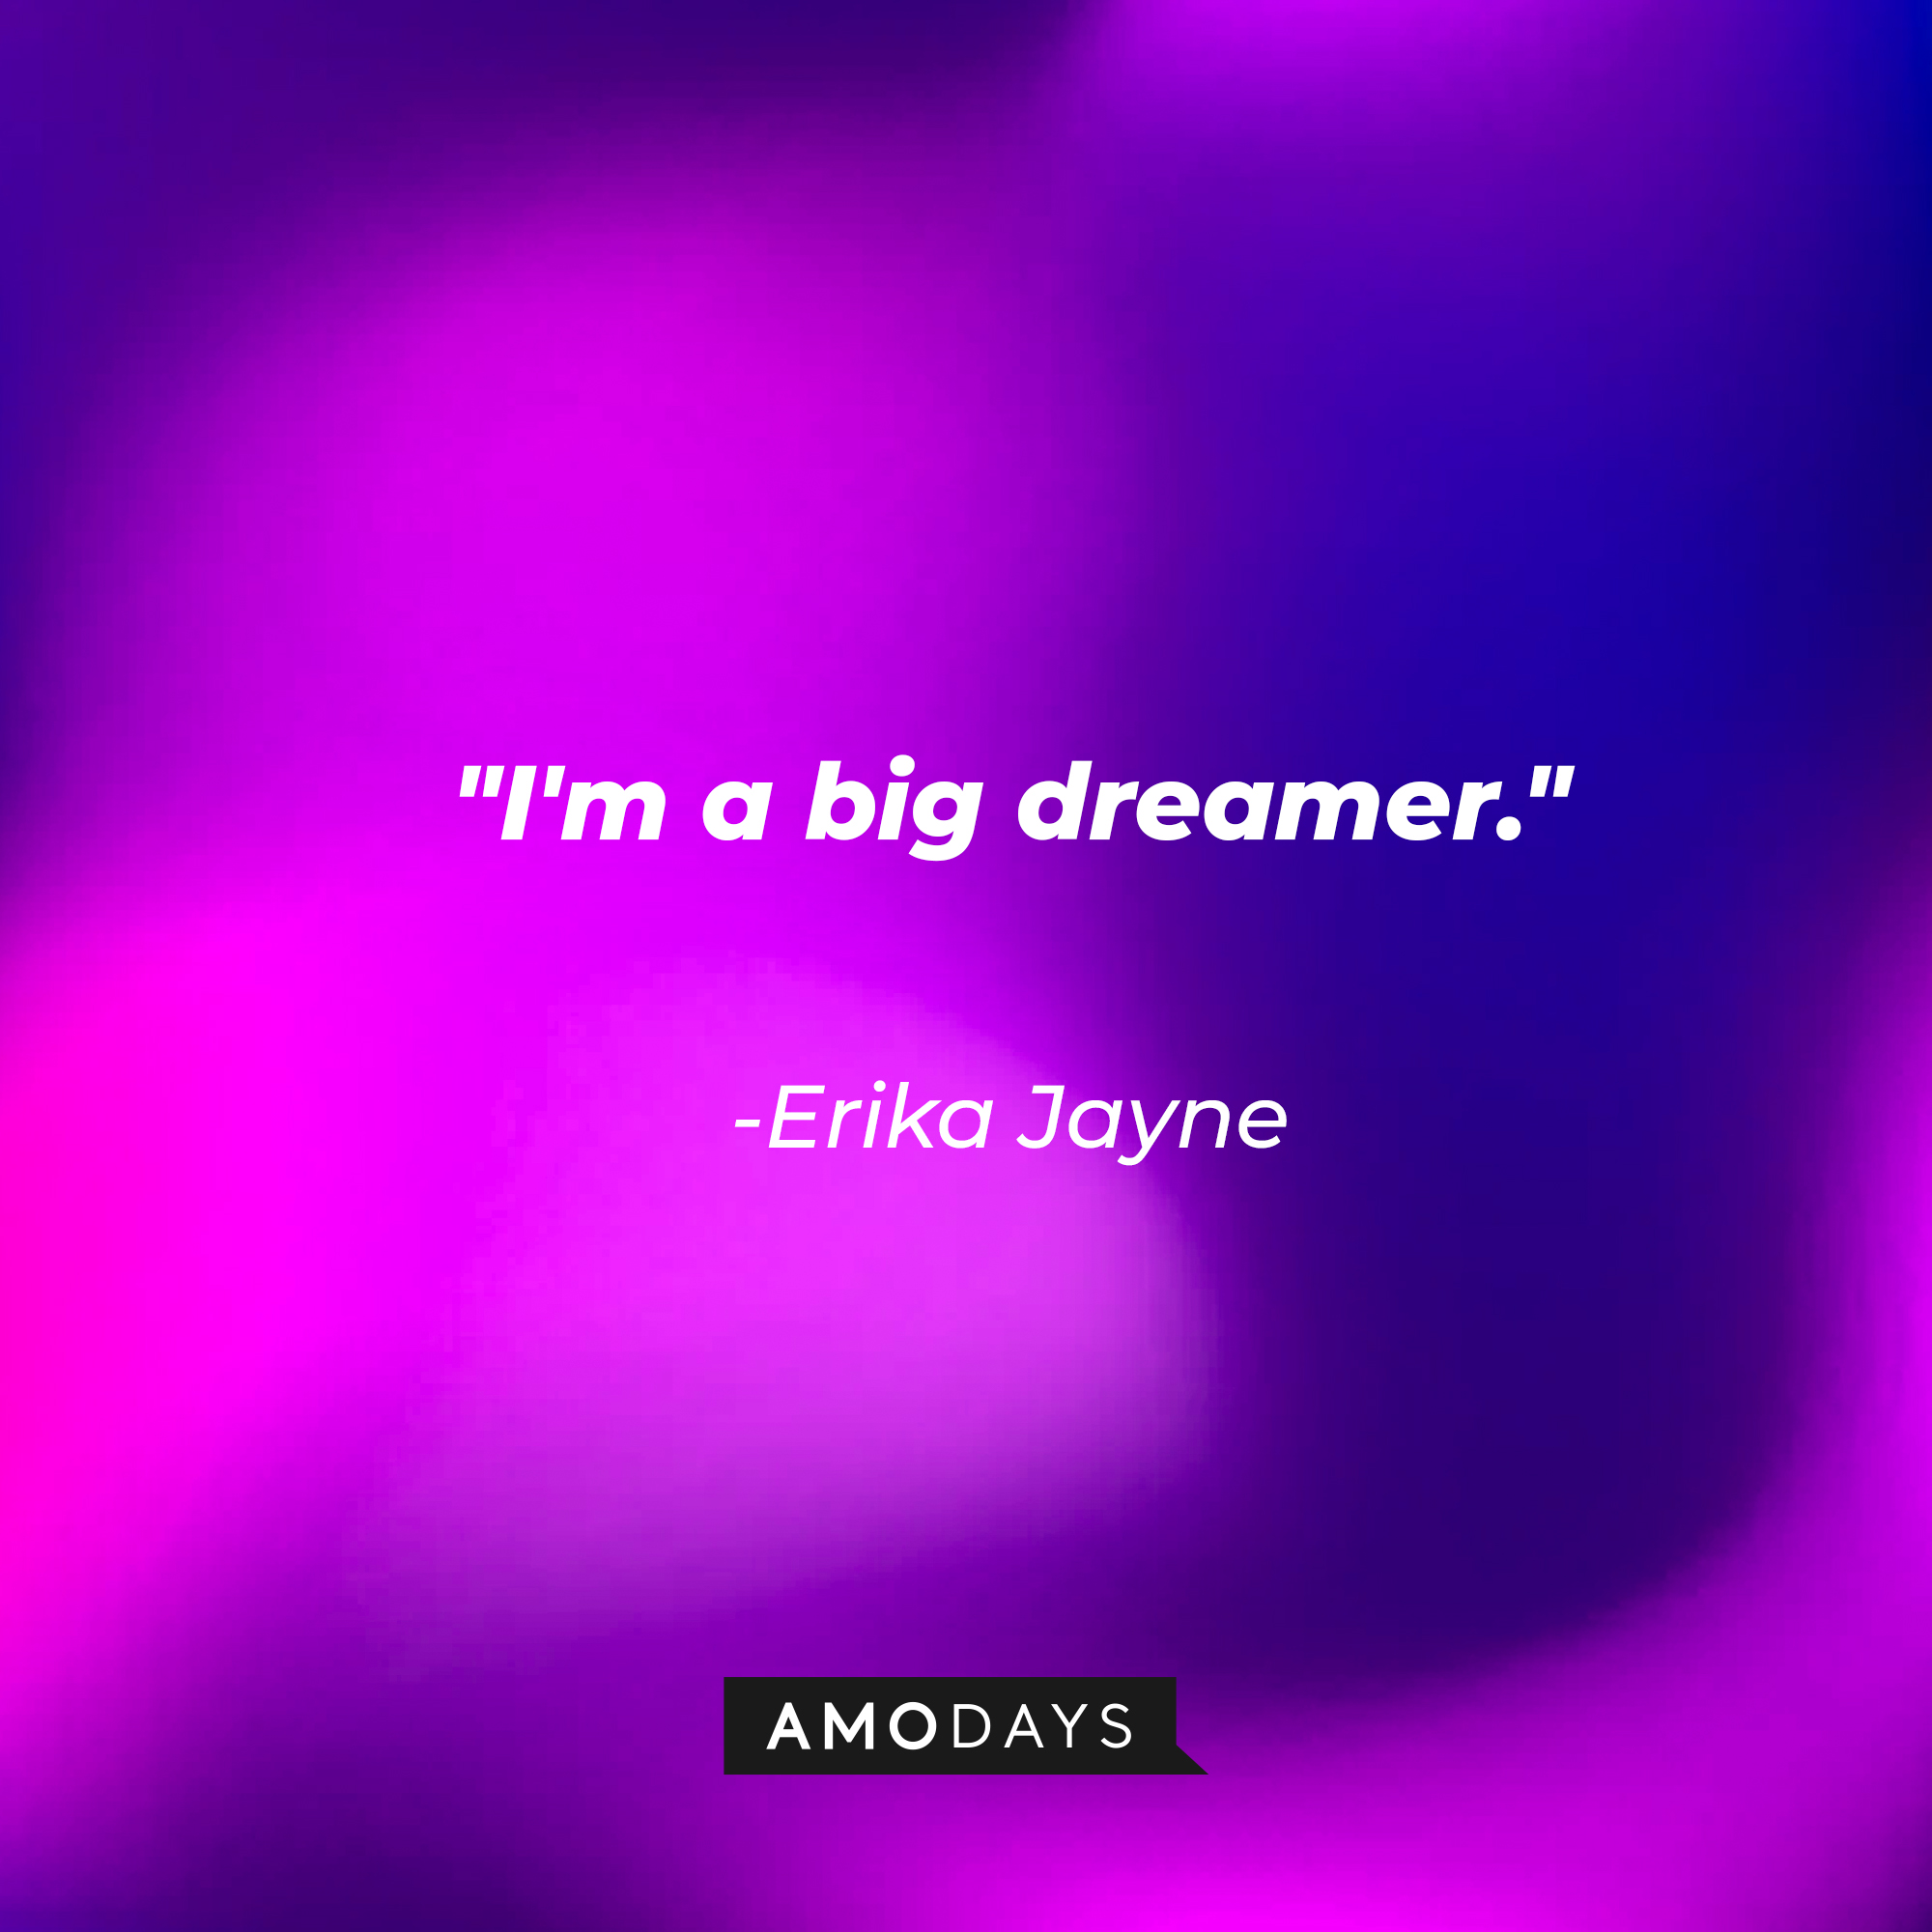 Erika Jayne’s quote: "I'm a big dreamer." | Image: Amodays